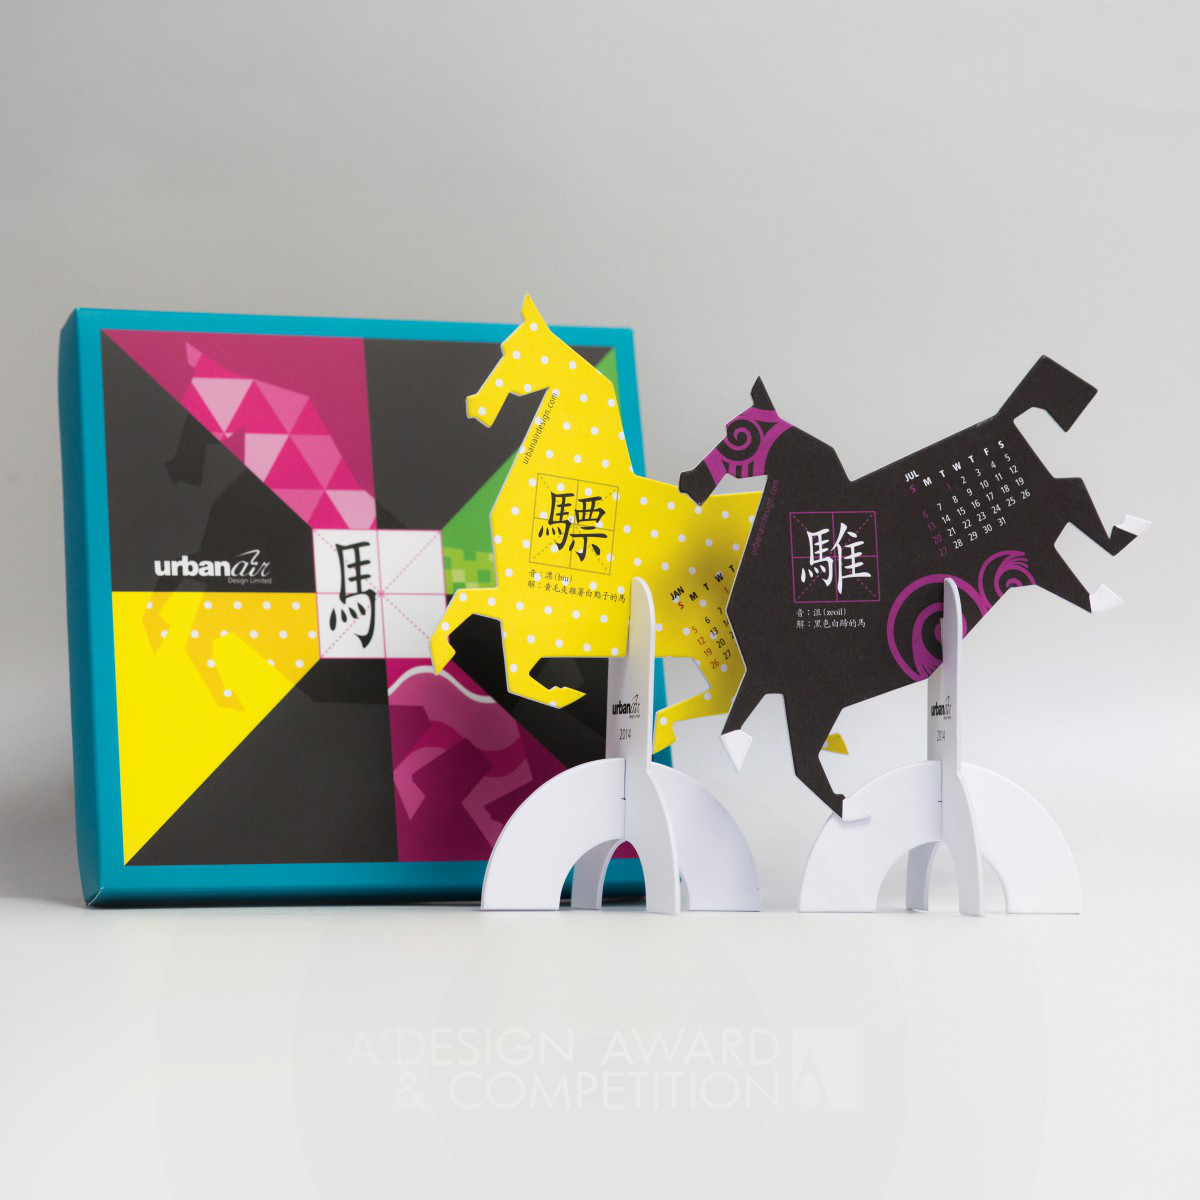 2014 The Year of Horse Calendar Design Creative desktop calendar by Wai Ming Ng